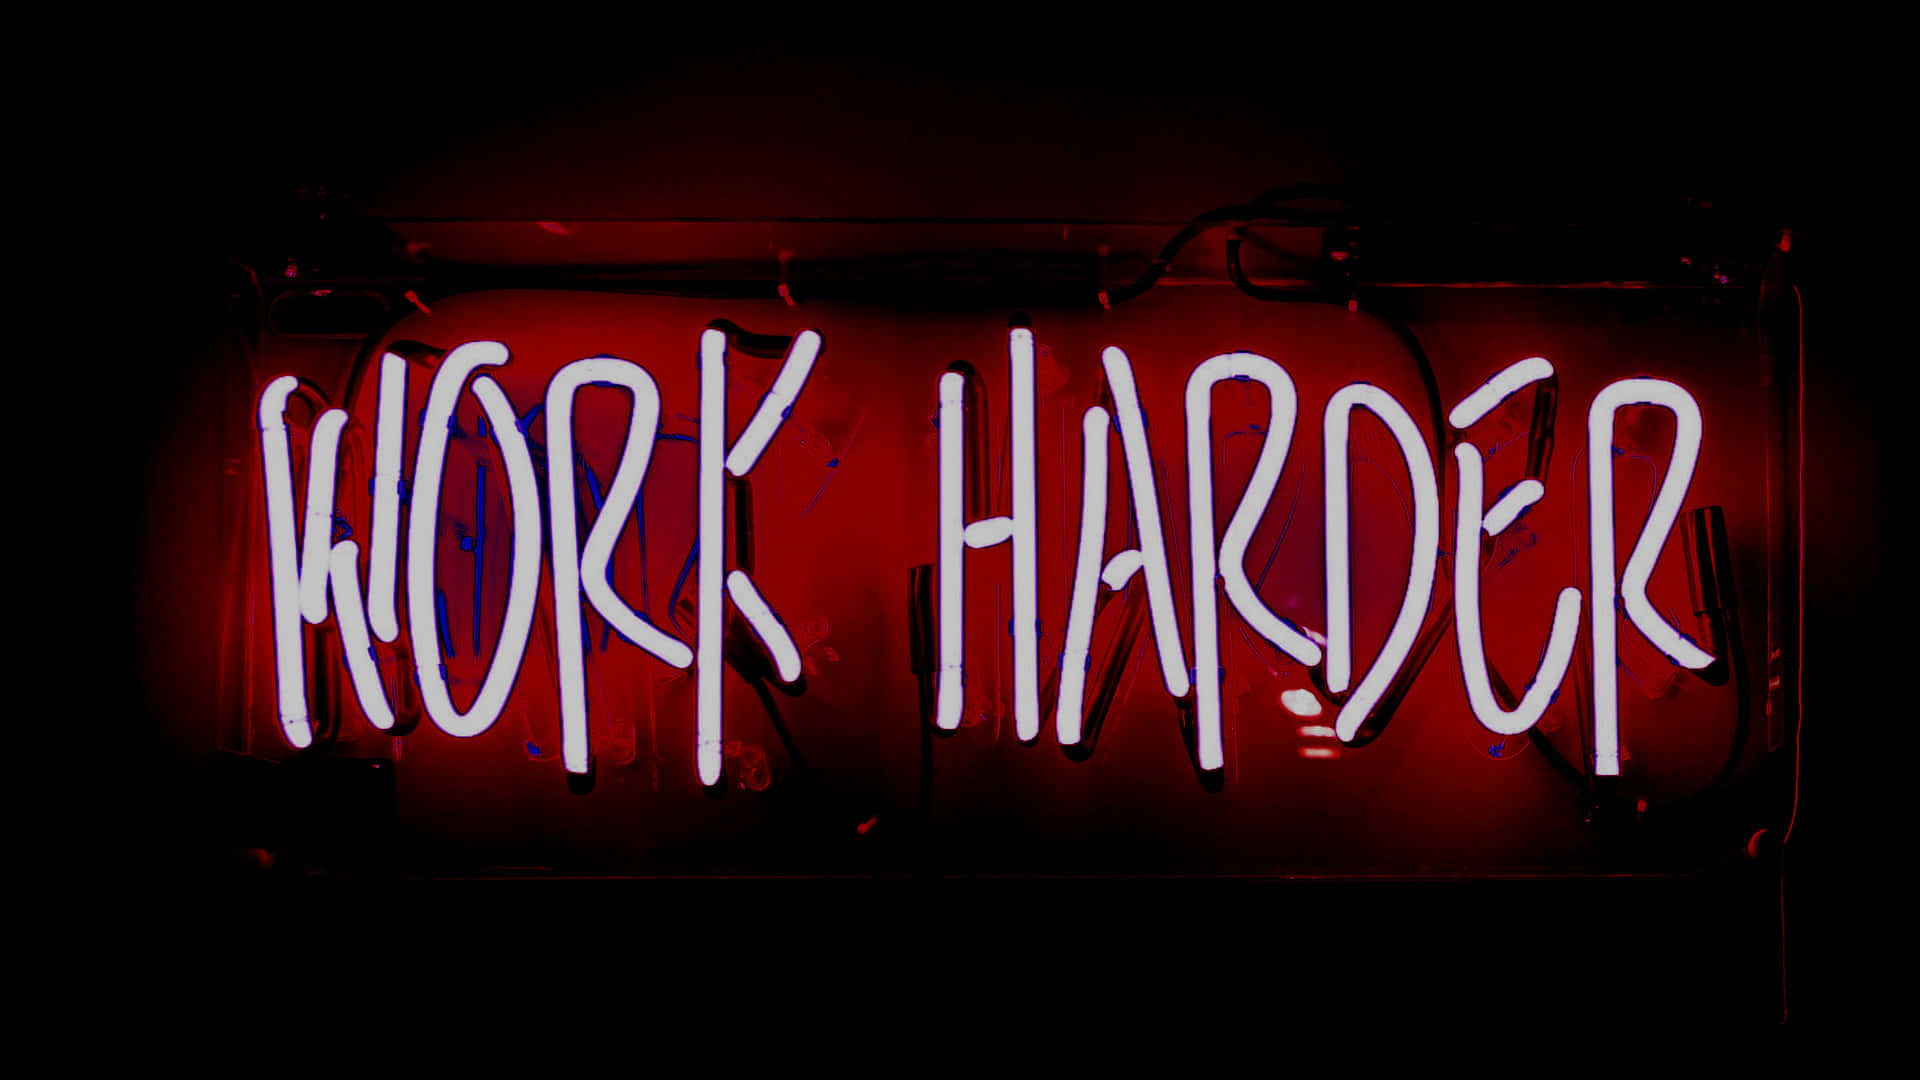 Work Harder Neon Sign Wallpaper